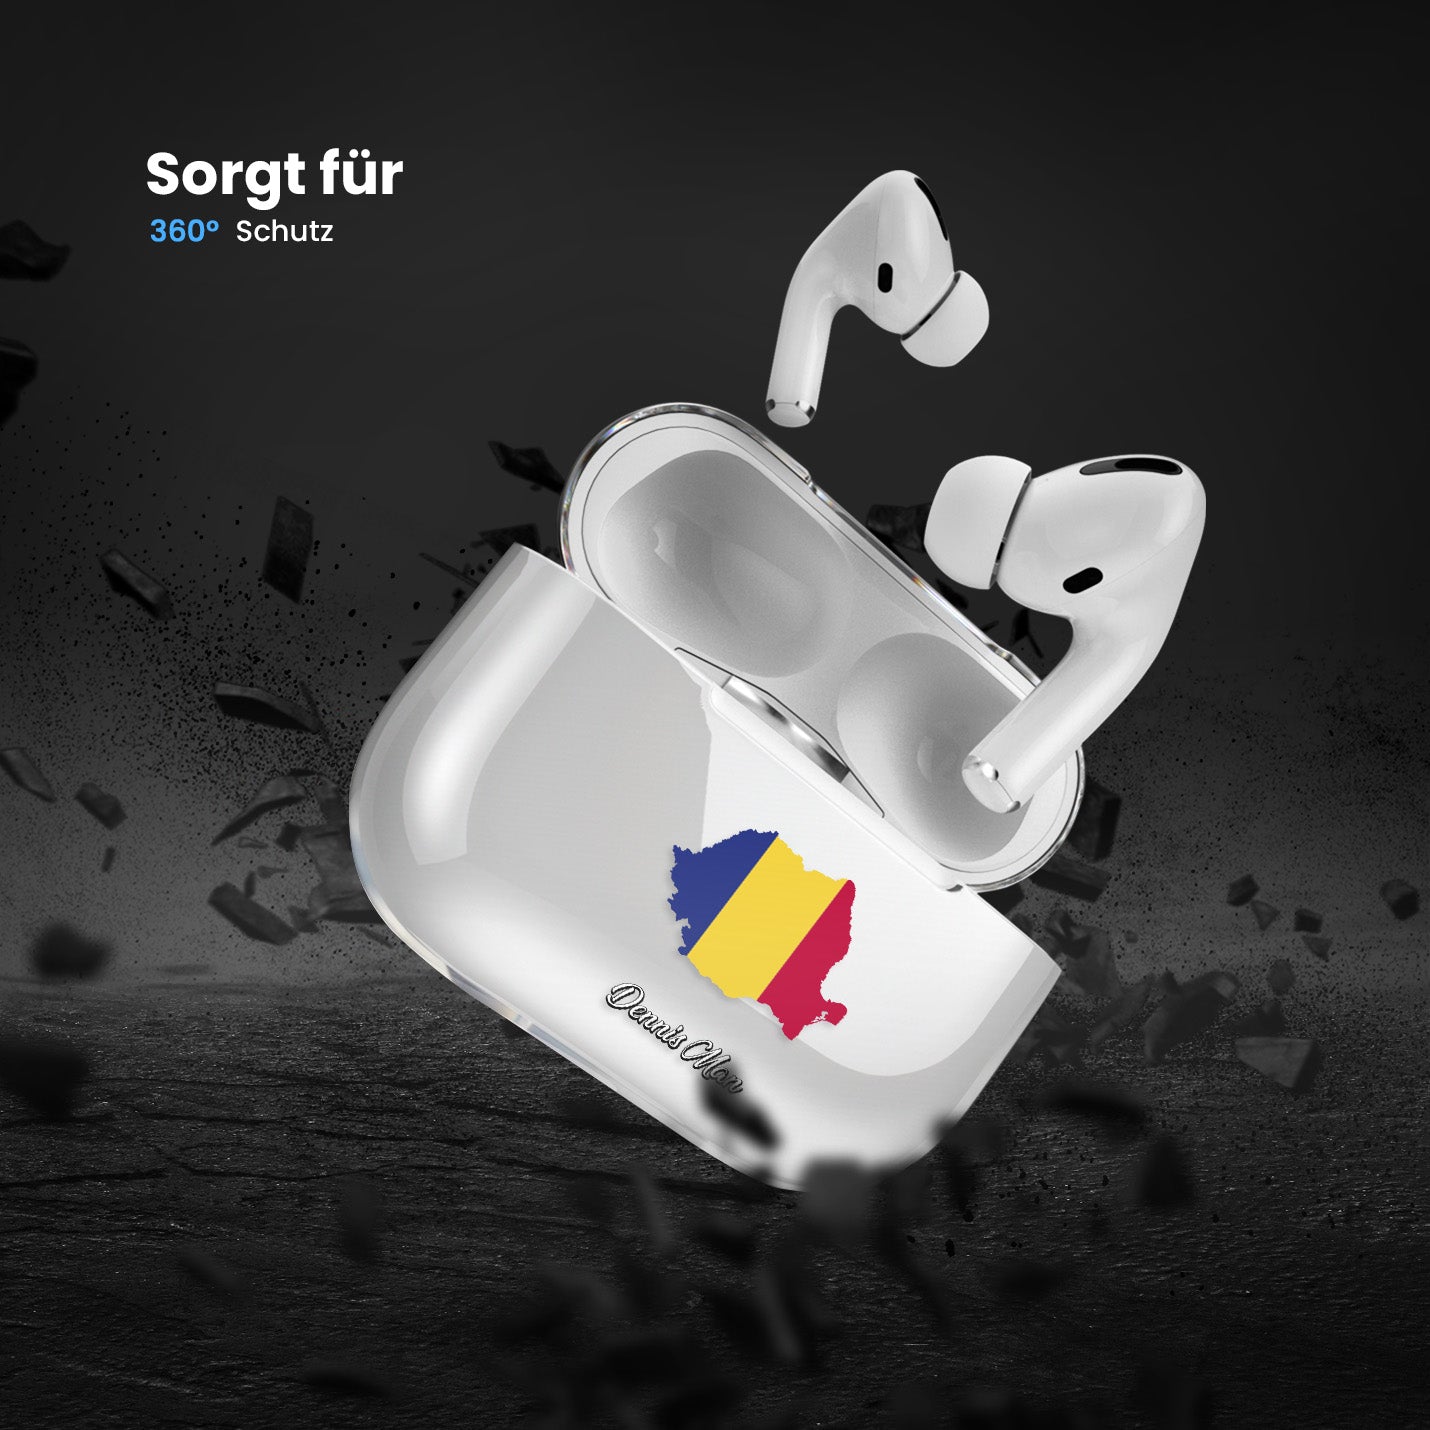 Airpods Hülle - Rumänien Flagge - 1instaphone